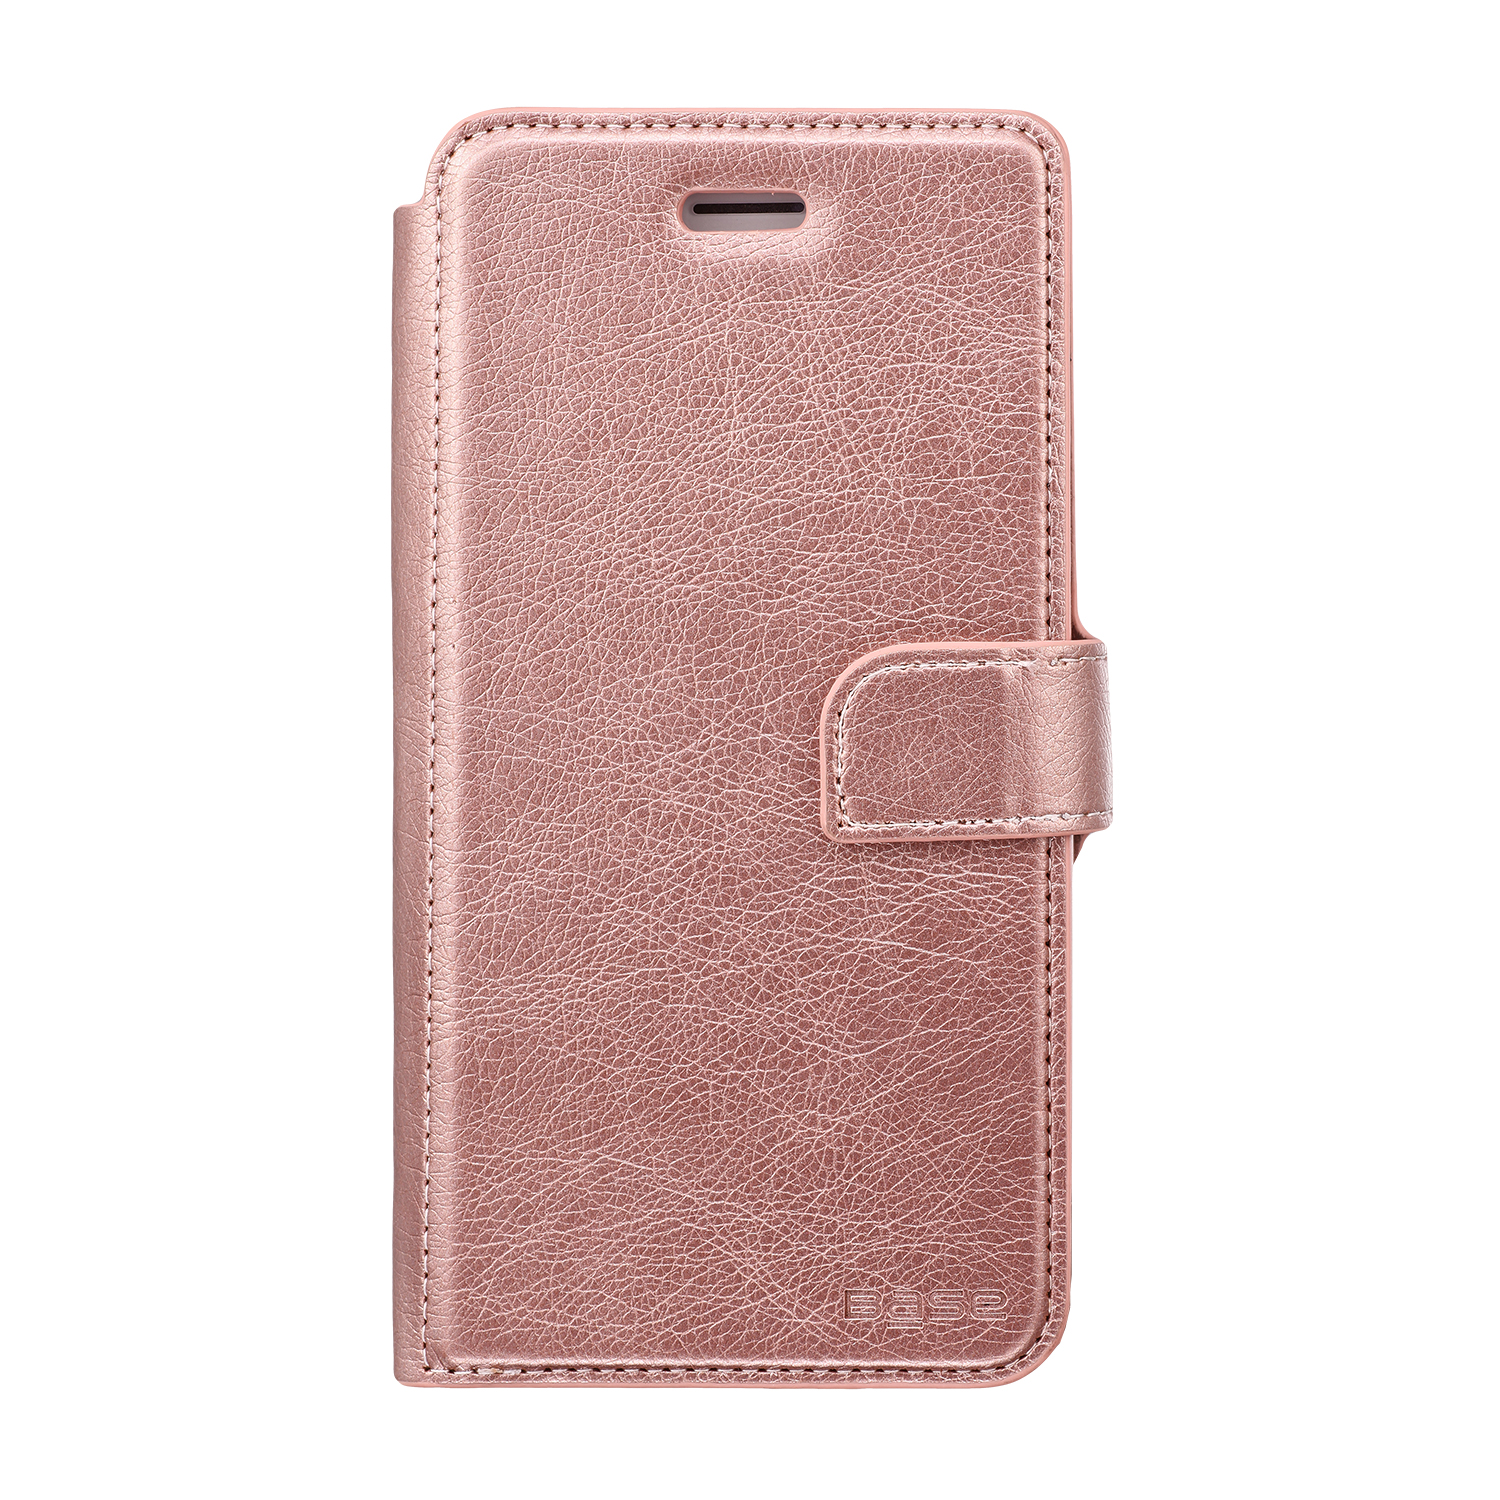 Base Folio Exec Wallet Case iPhone 7 / 8 Plus - Rose